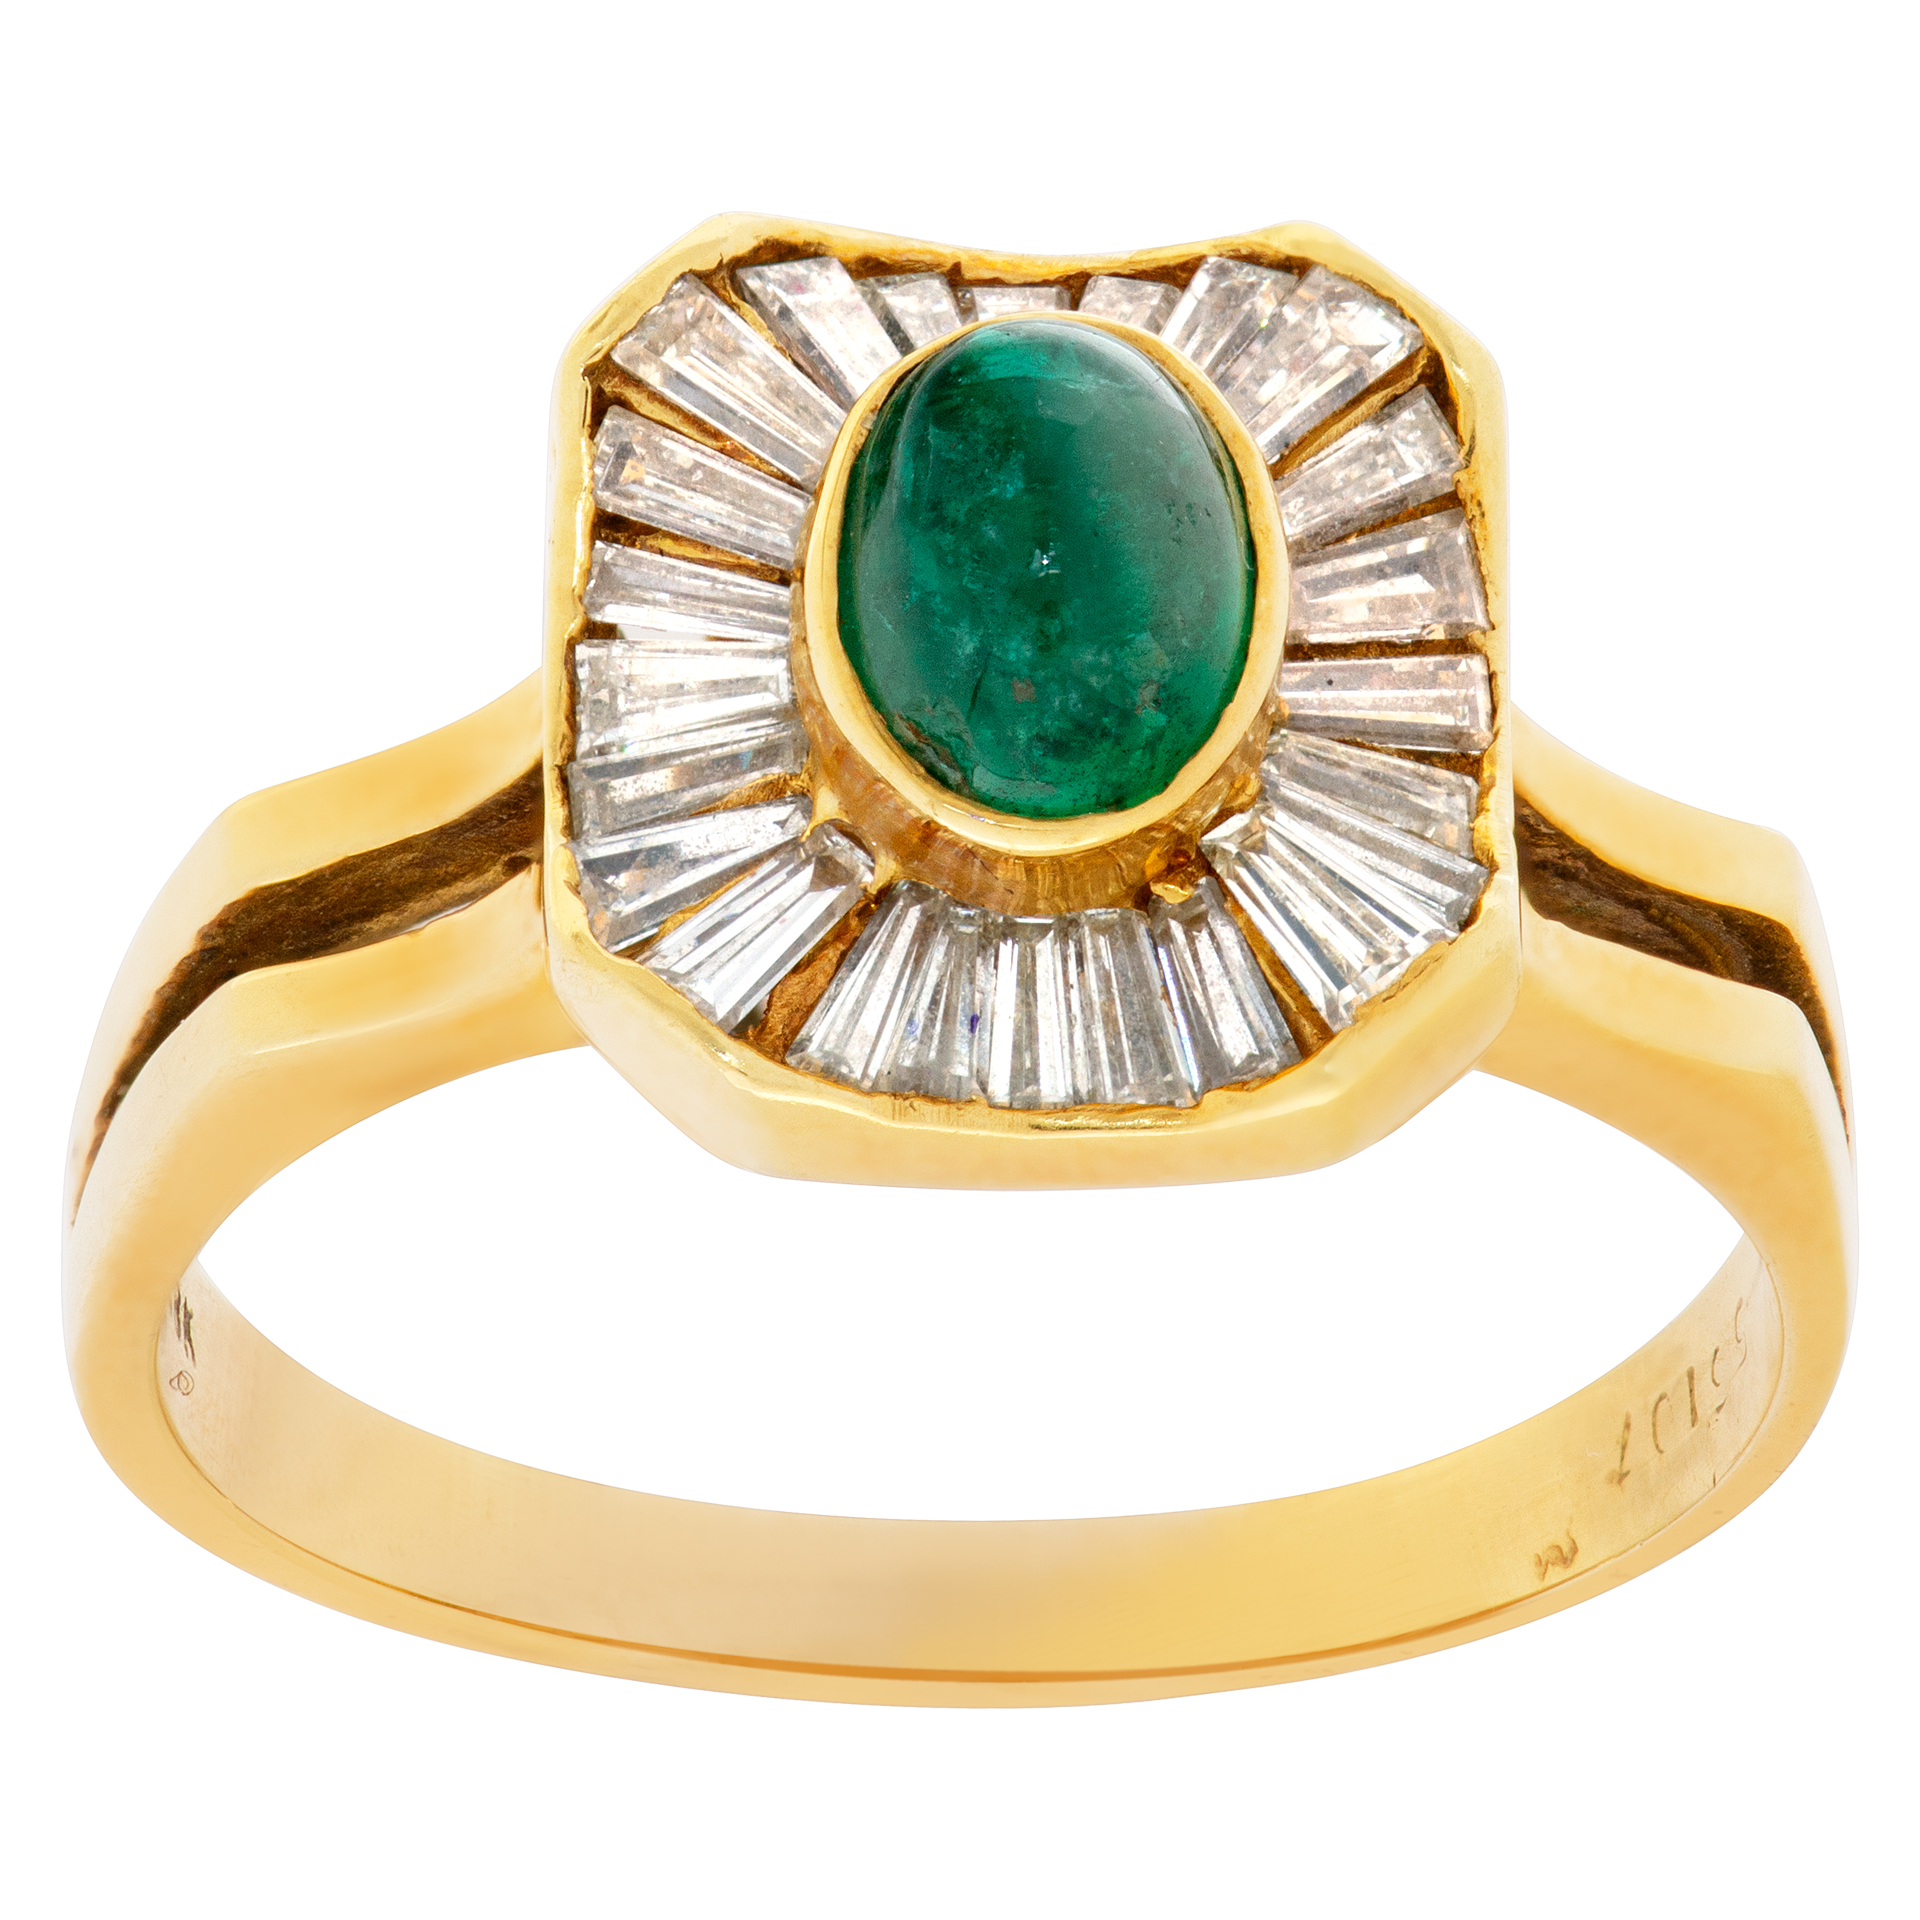 "Ballerina" cabochon emerald & diamond baguettes ring, set in 18k yellow gold